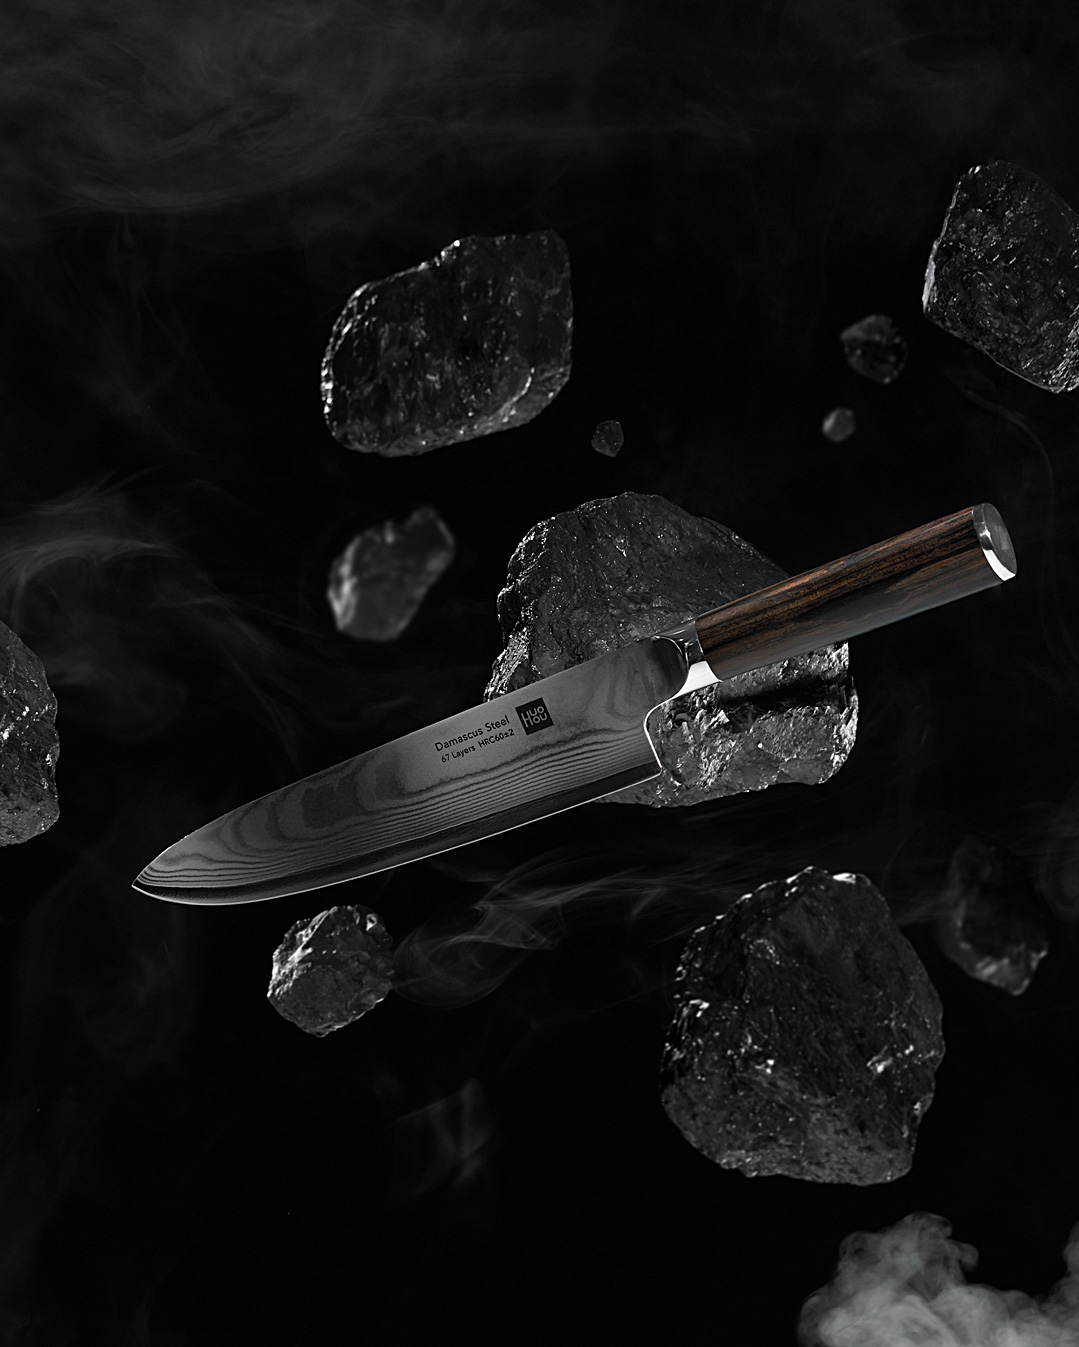 HuoHou Damascus Steel Kitchen Knife